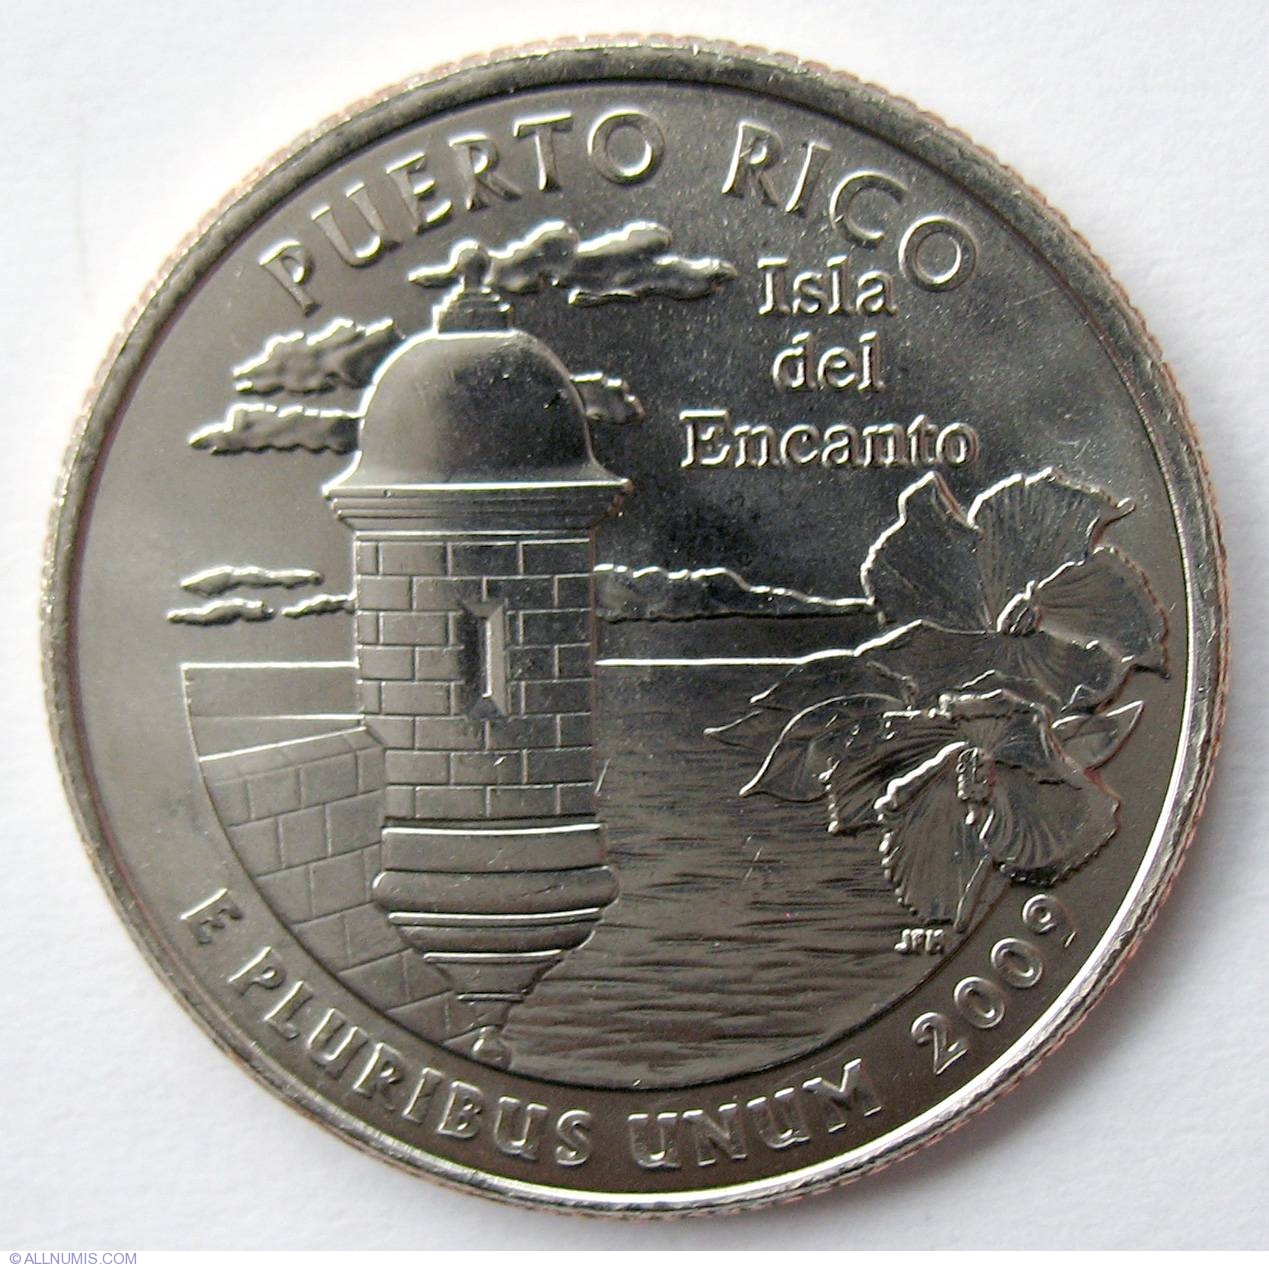 2009-D  BU Mint State PUERTO RICO US Territory Quarter 